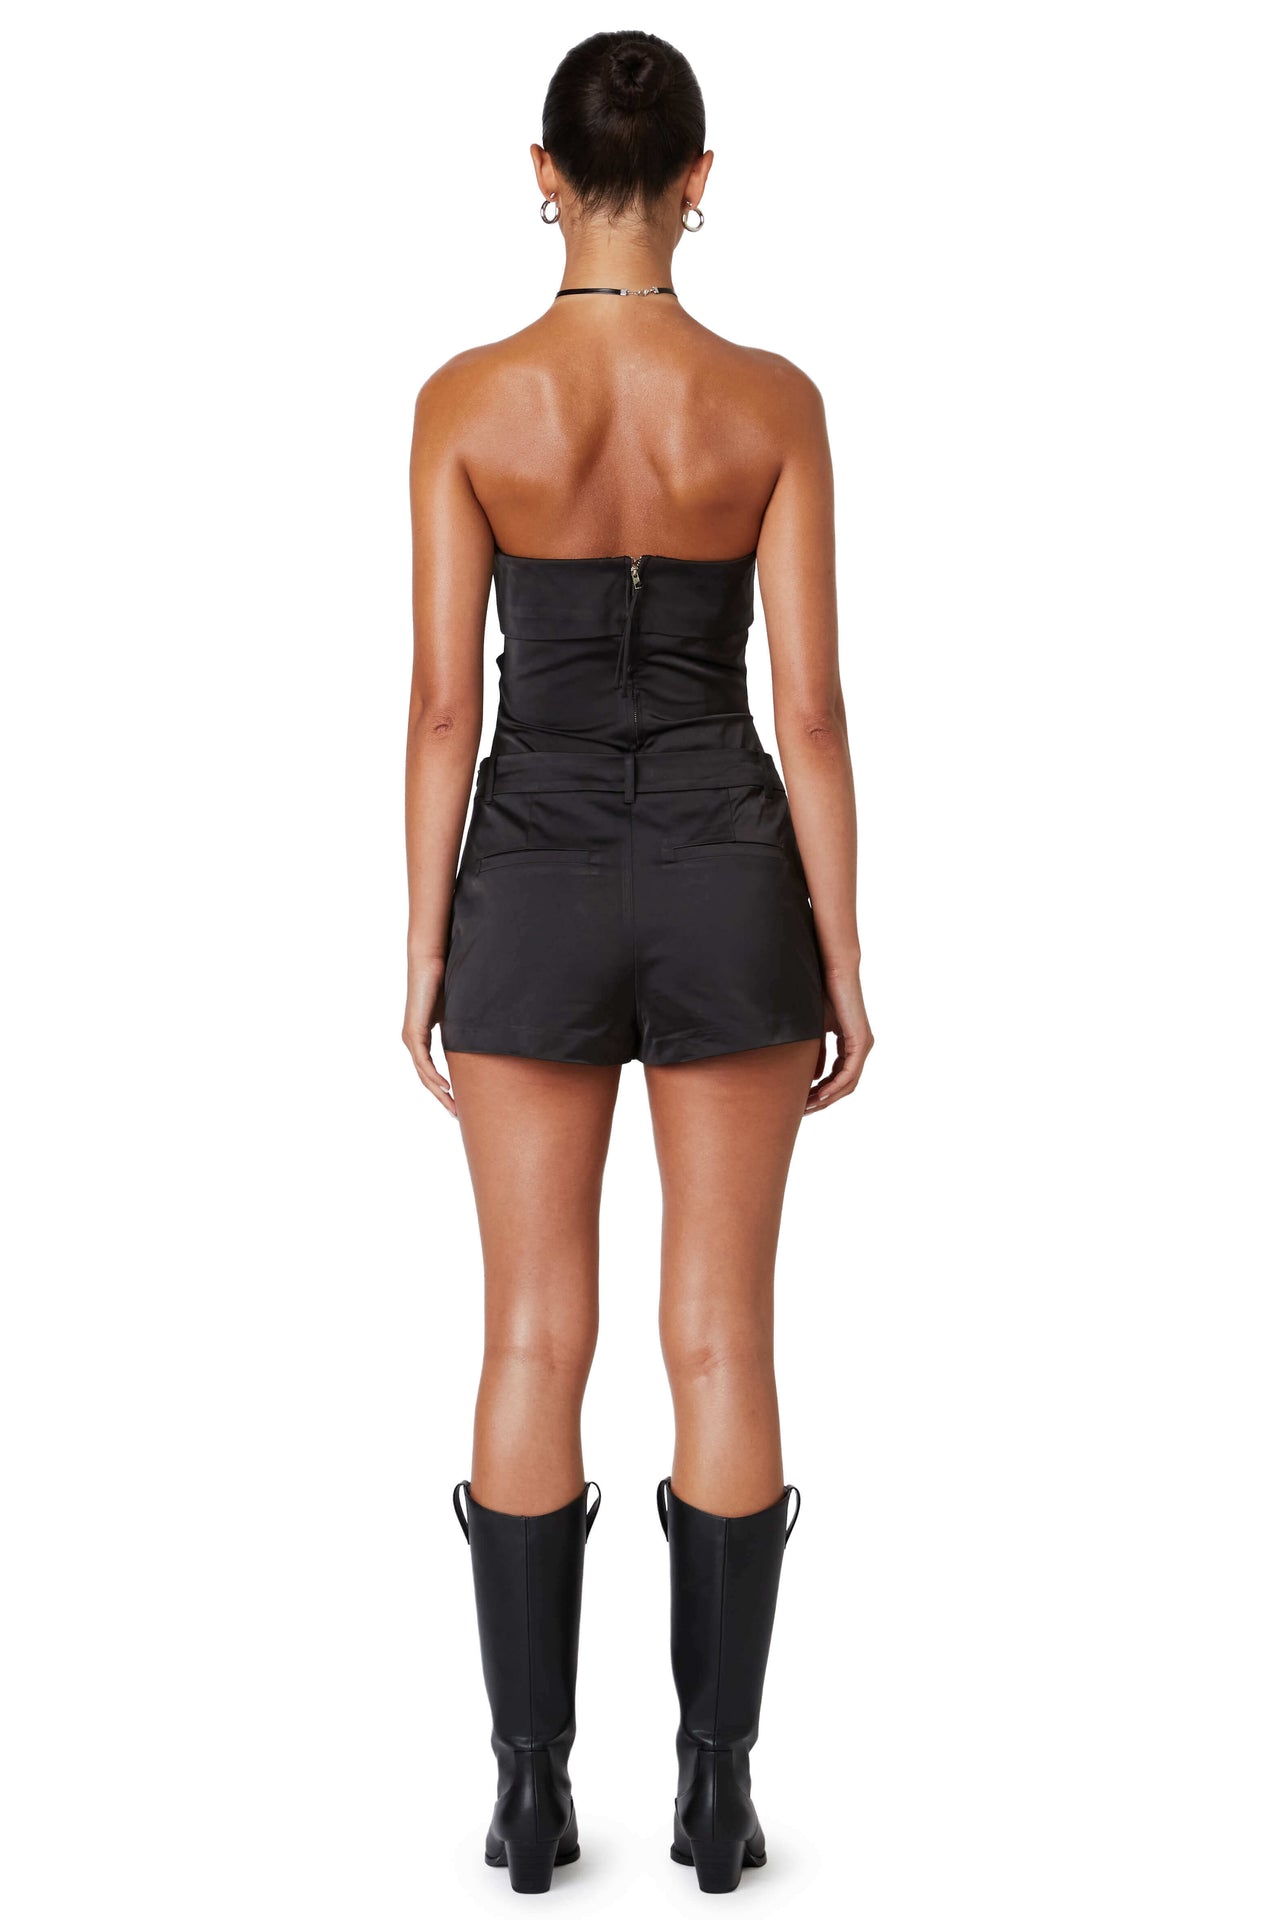 Ariel Skort Black, Mini Skirt by NIA | LIT Boutique